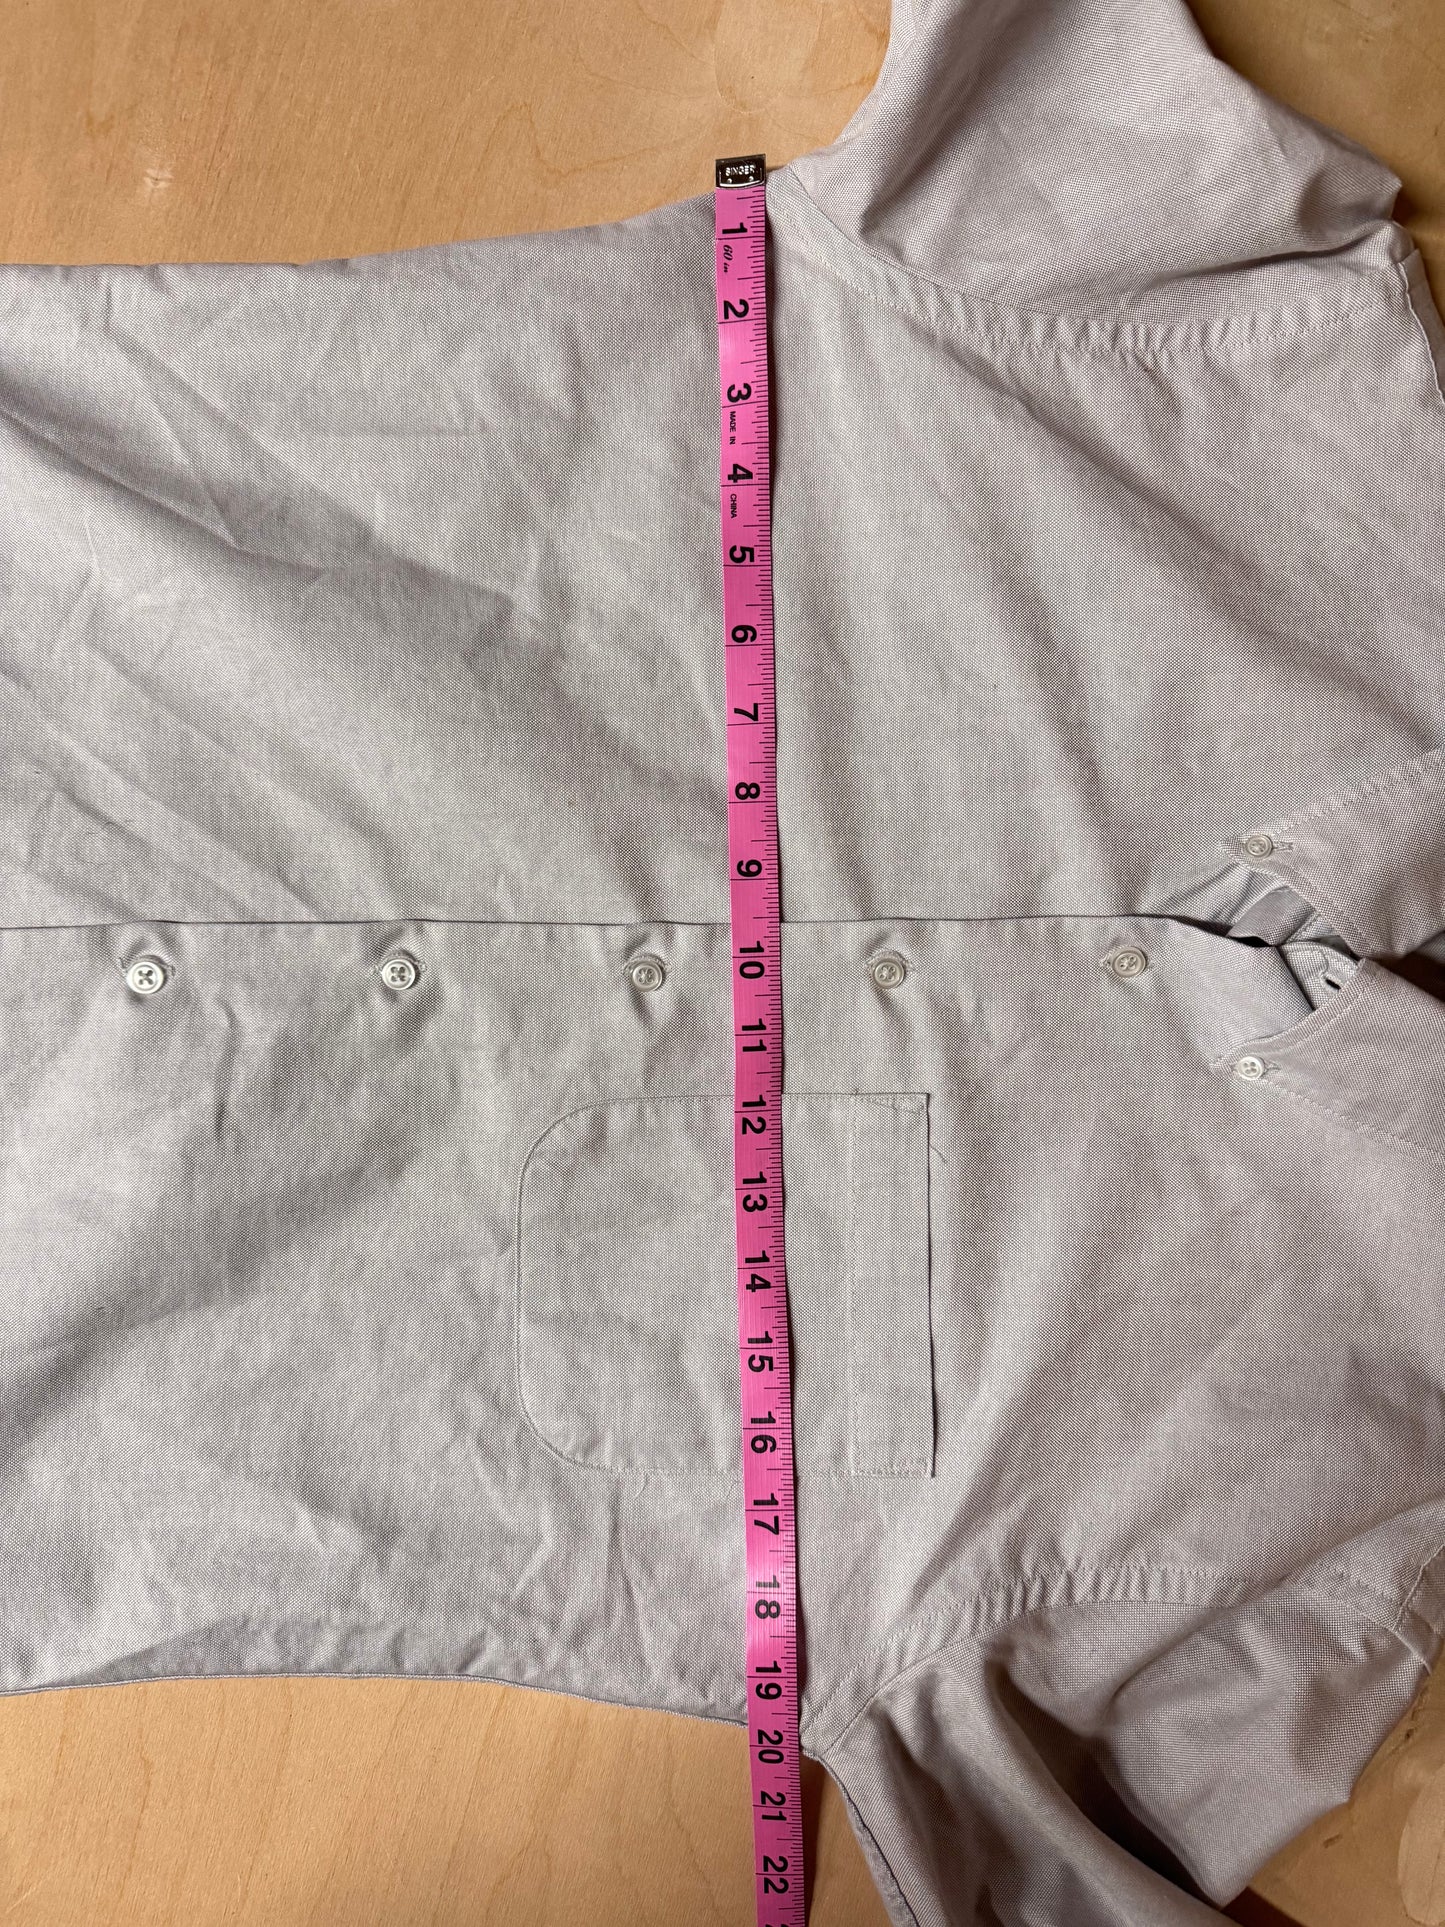 Naked & Famous Men's Button Down Dress Casual Shirts - Size M (3 Pack Bundle)